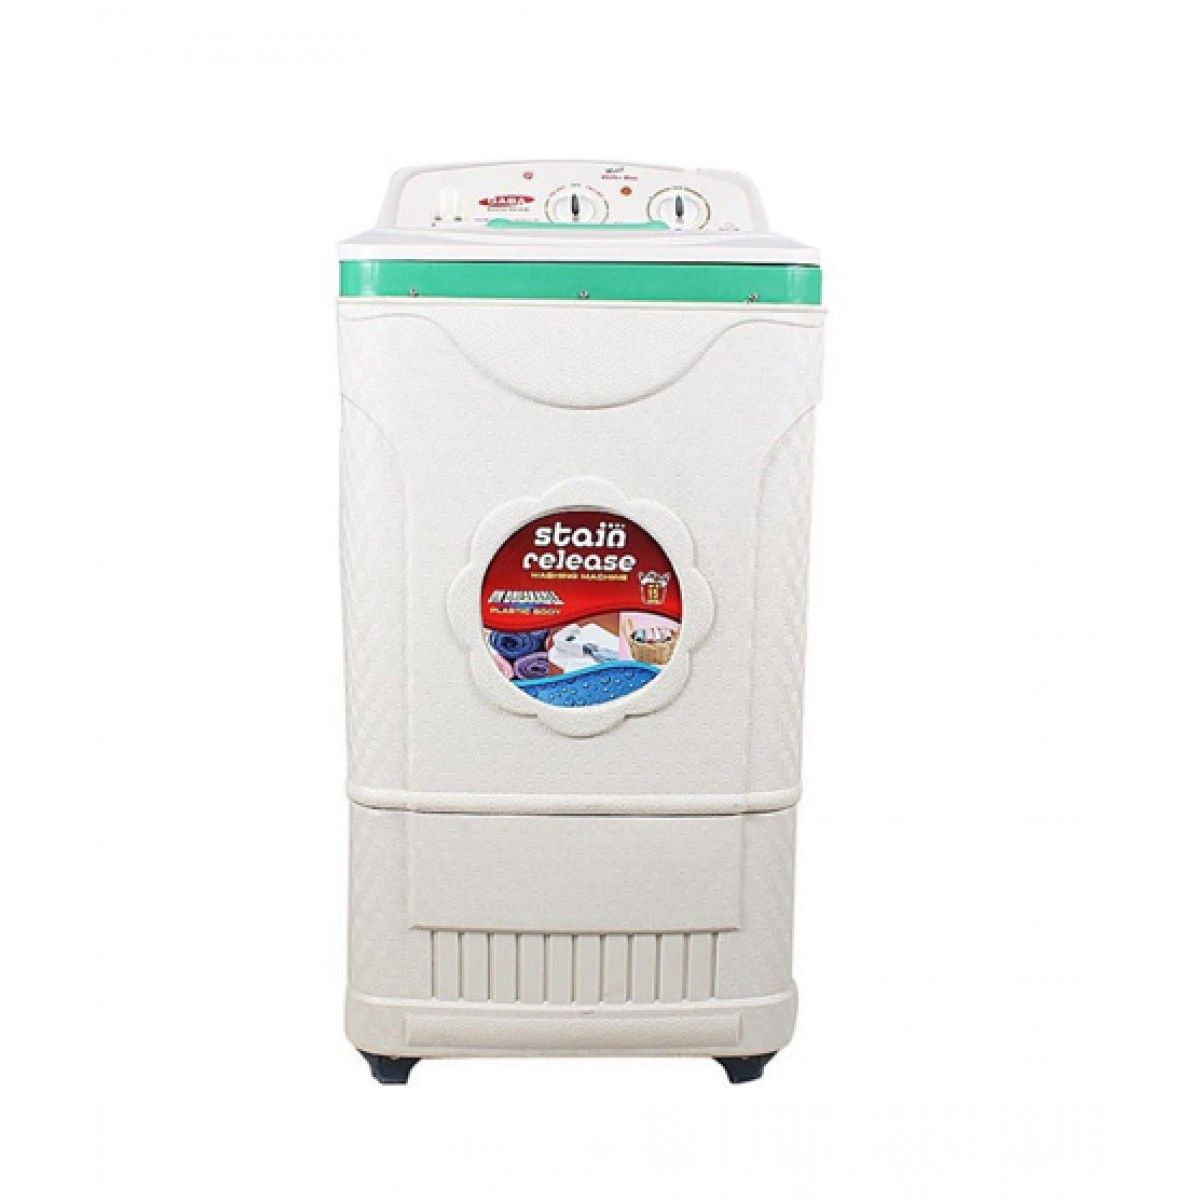 Gaba National GN-4515 Single Tub Washing Machine